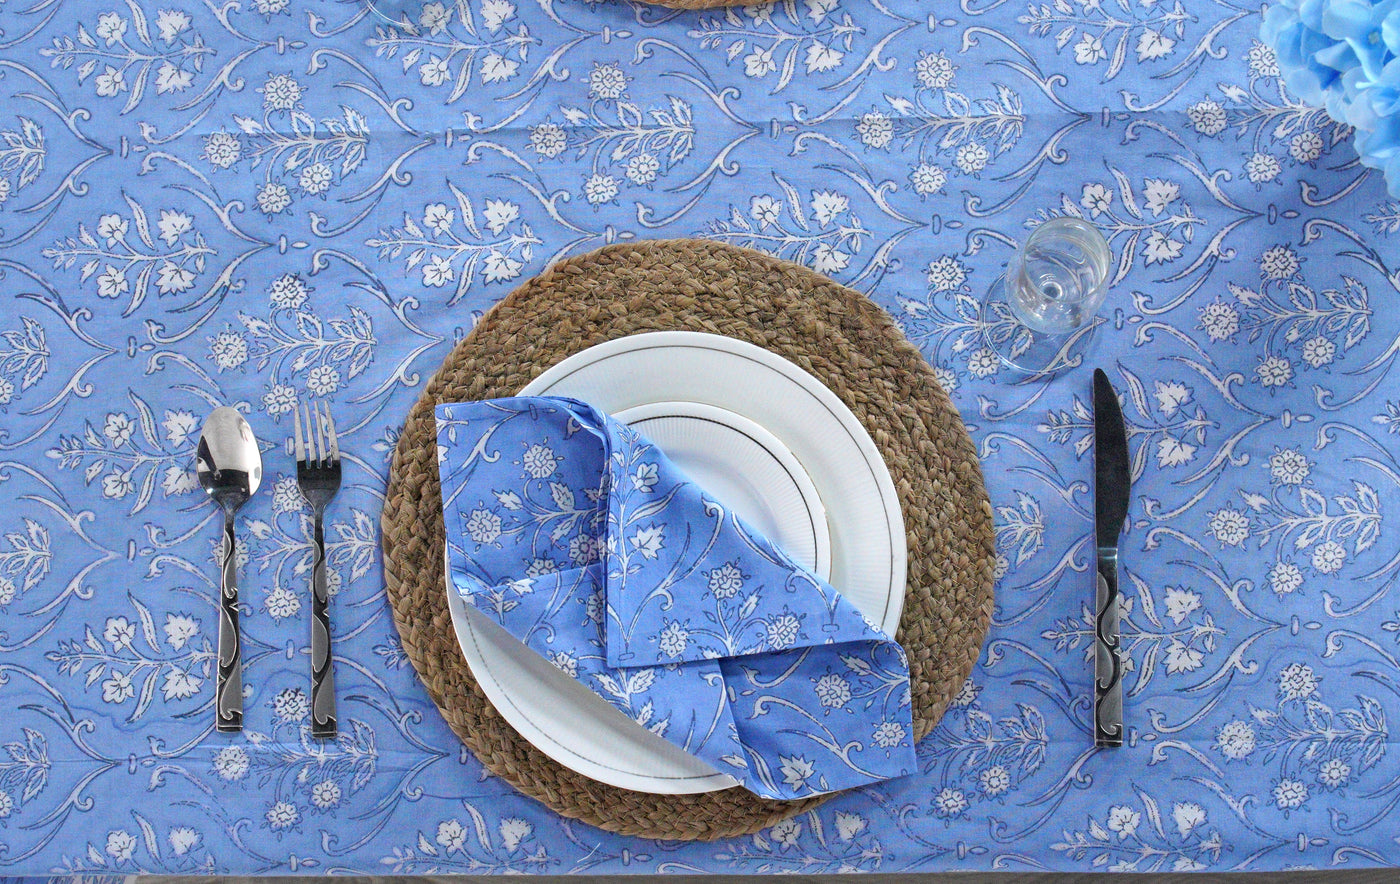 Fabricrush Cornflower Blue And White Block Print Tablecloth Table Cover India Cotton Table Linen